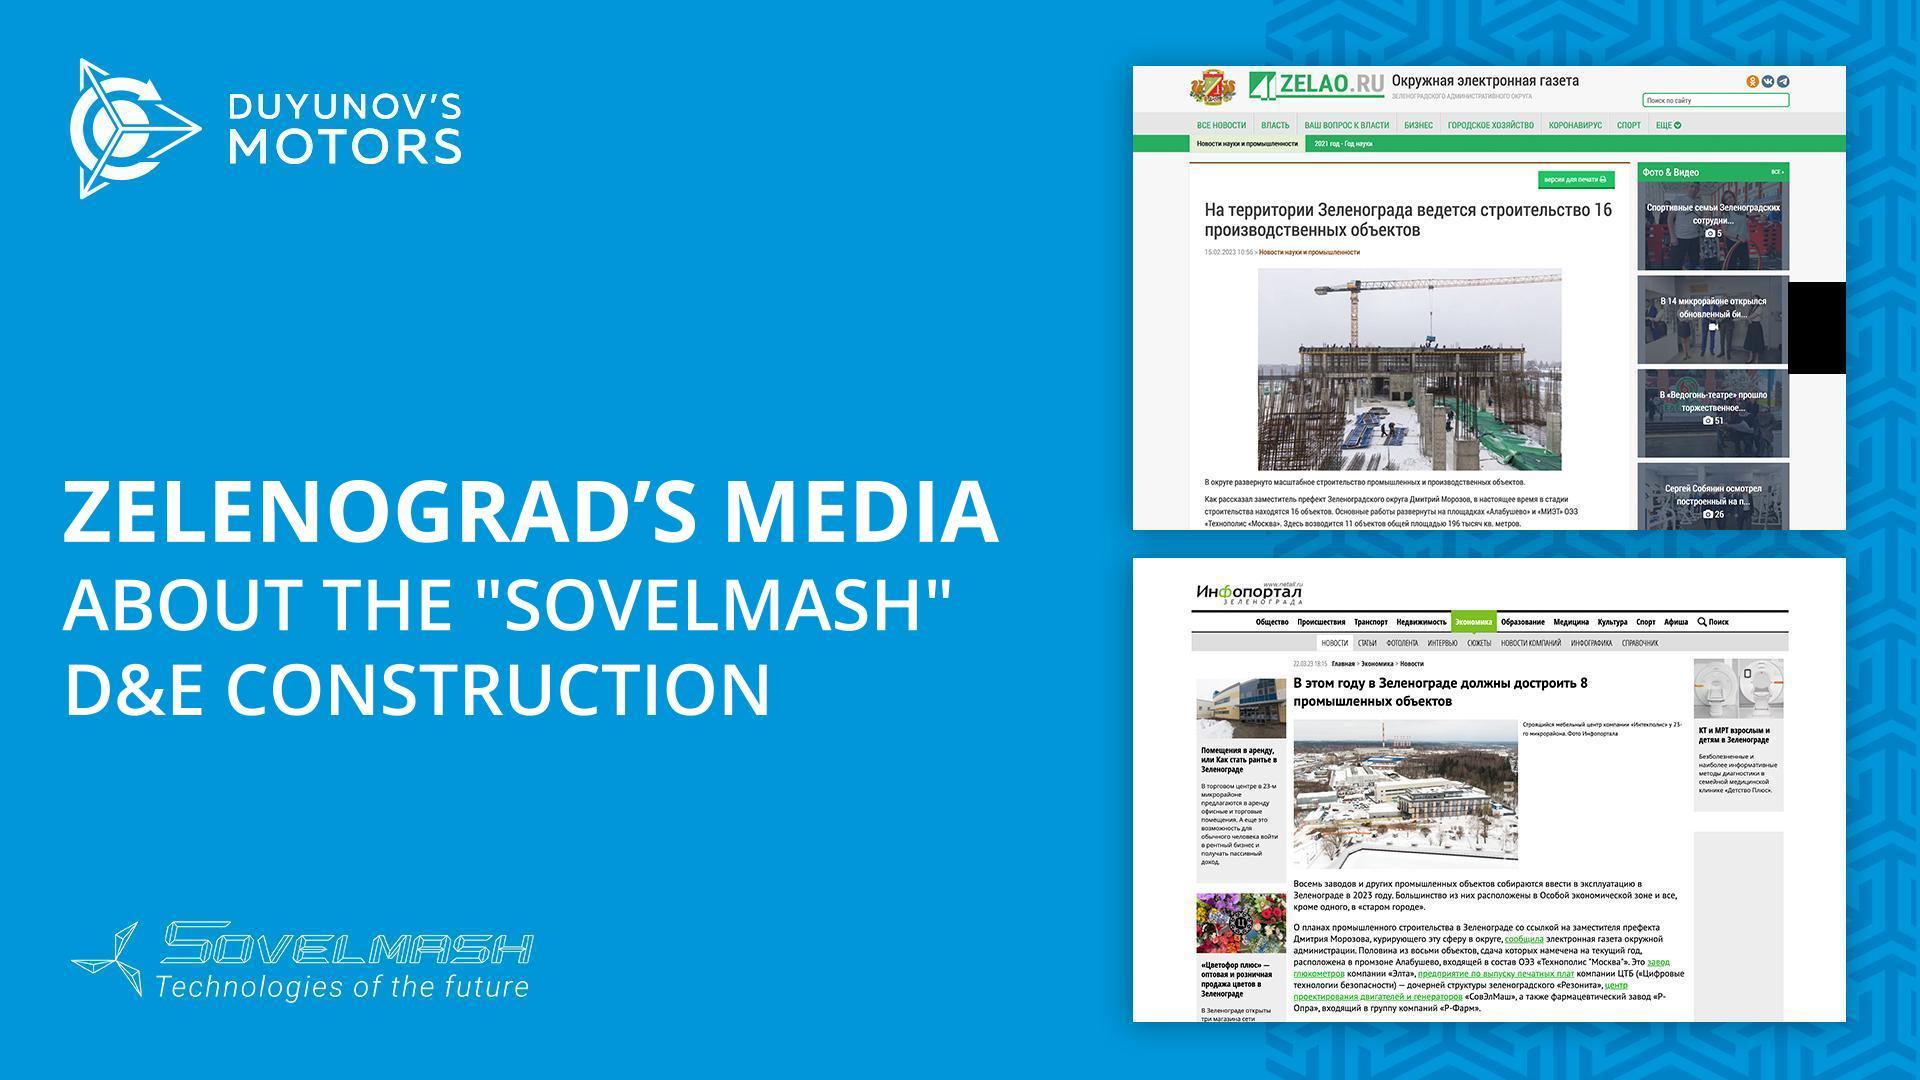 Zelenograd's media about the "Sovelmash" D&E construction